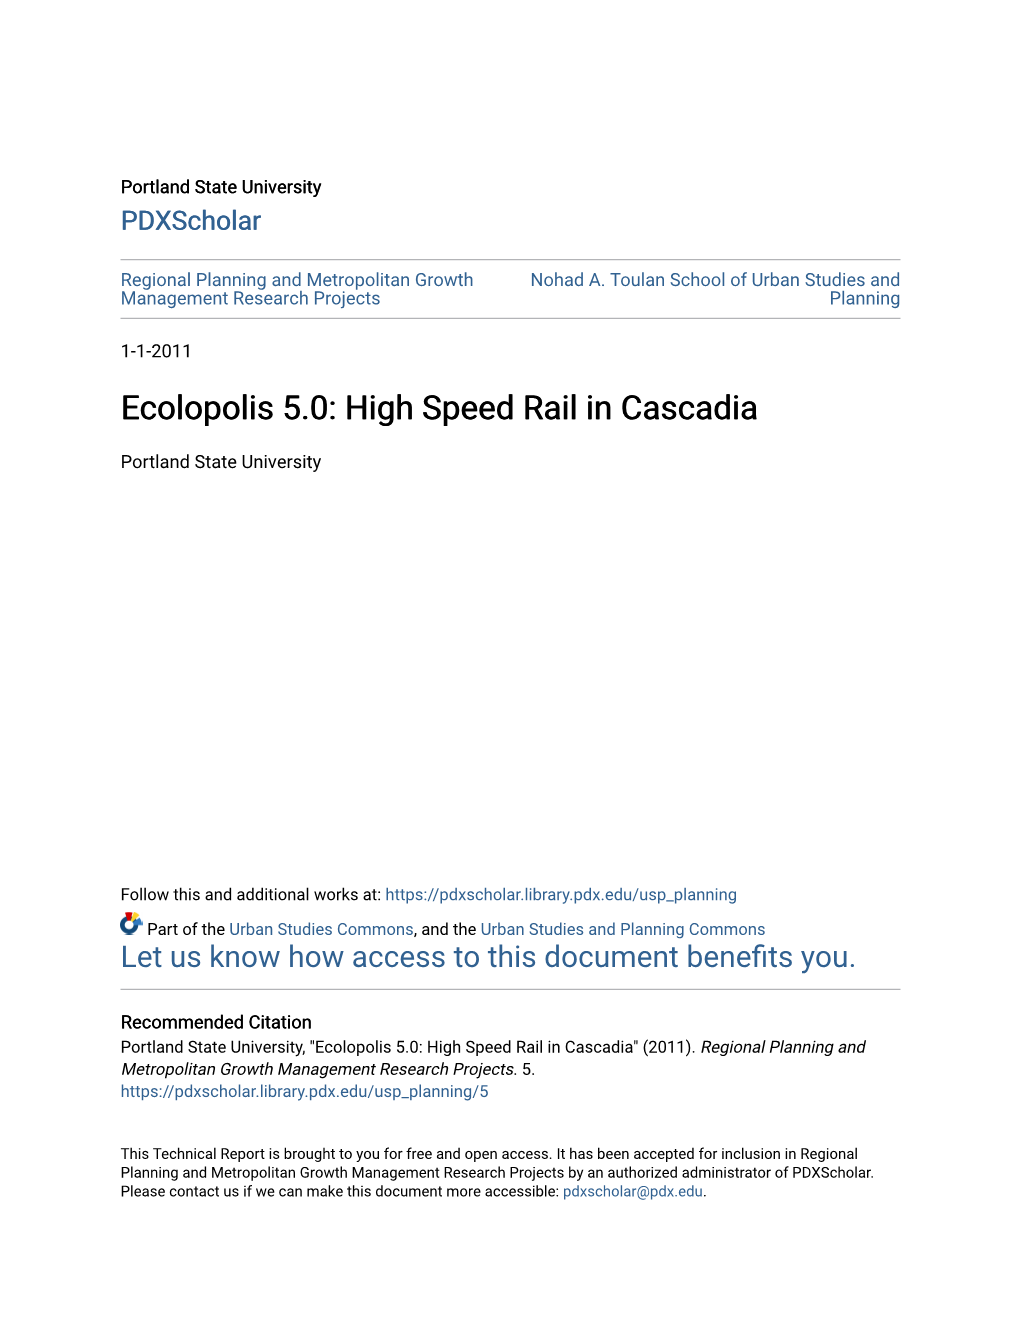 High Speed Rail in Cascadia